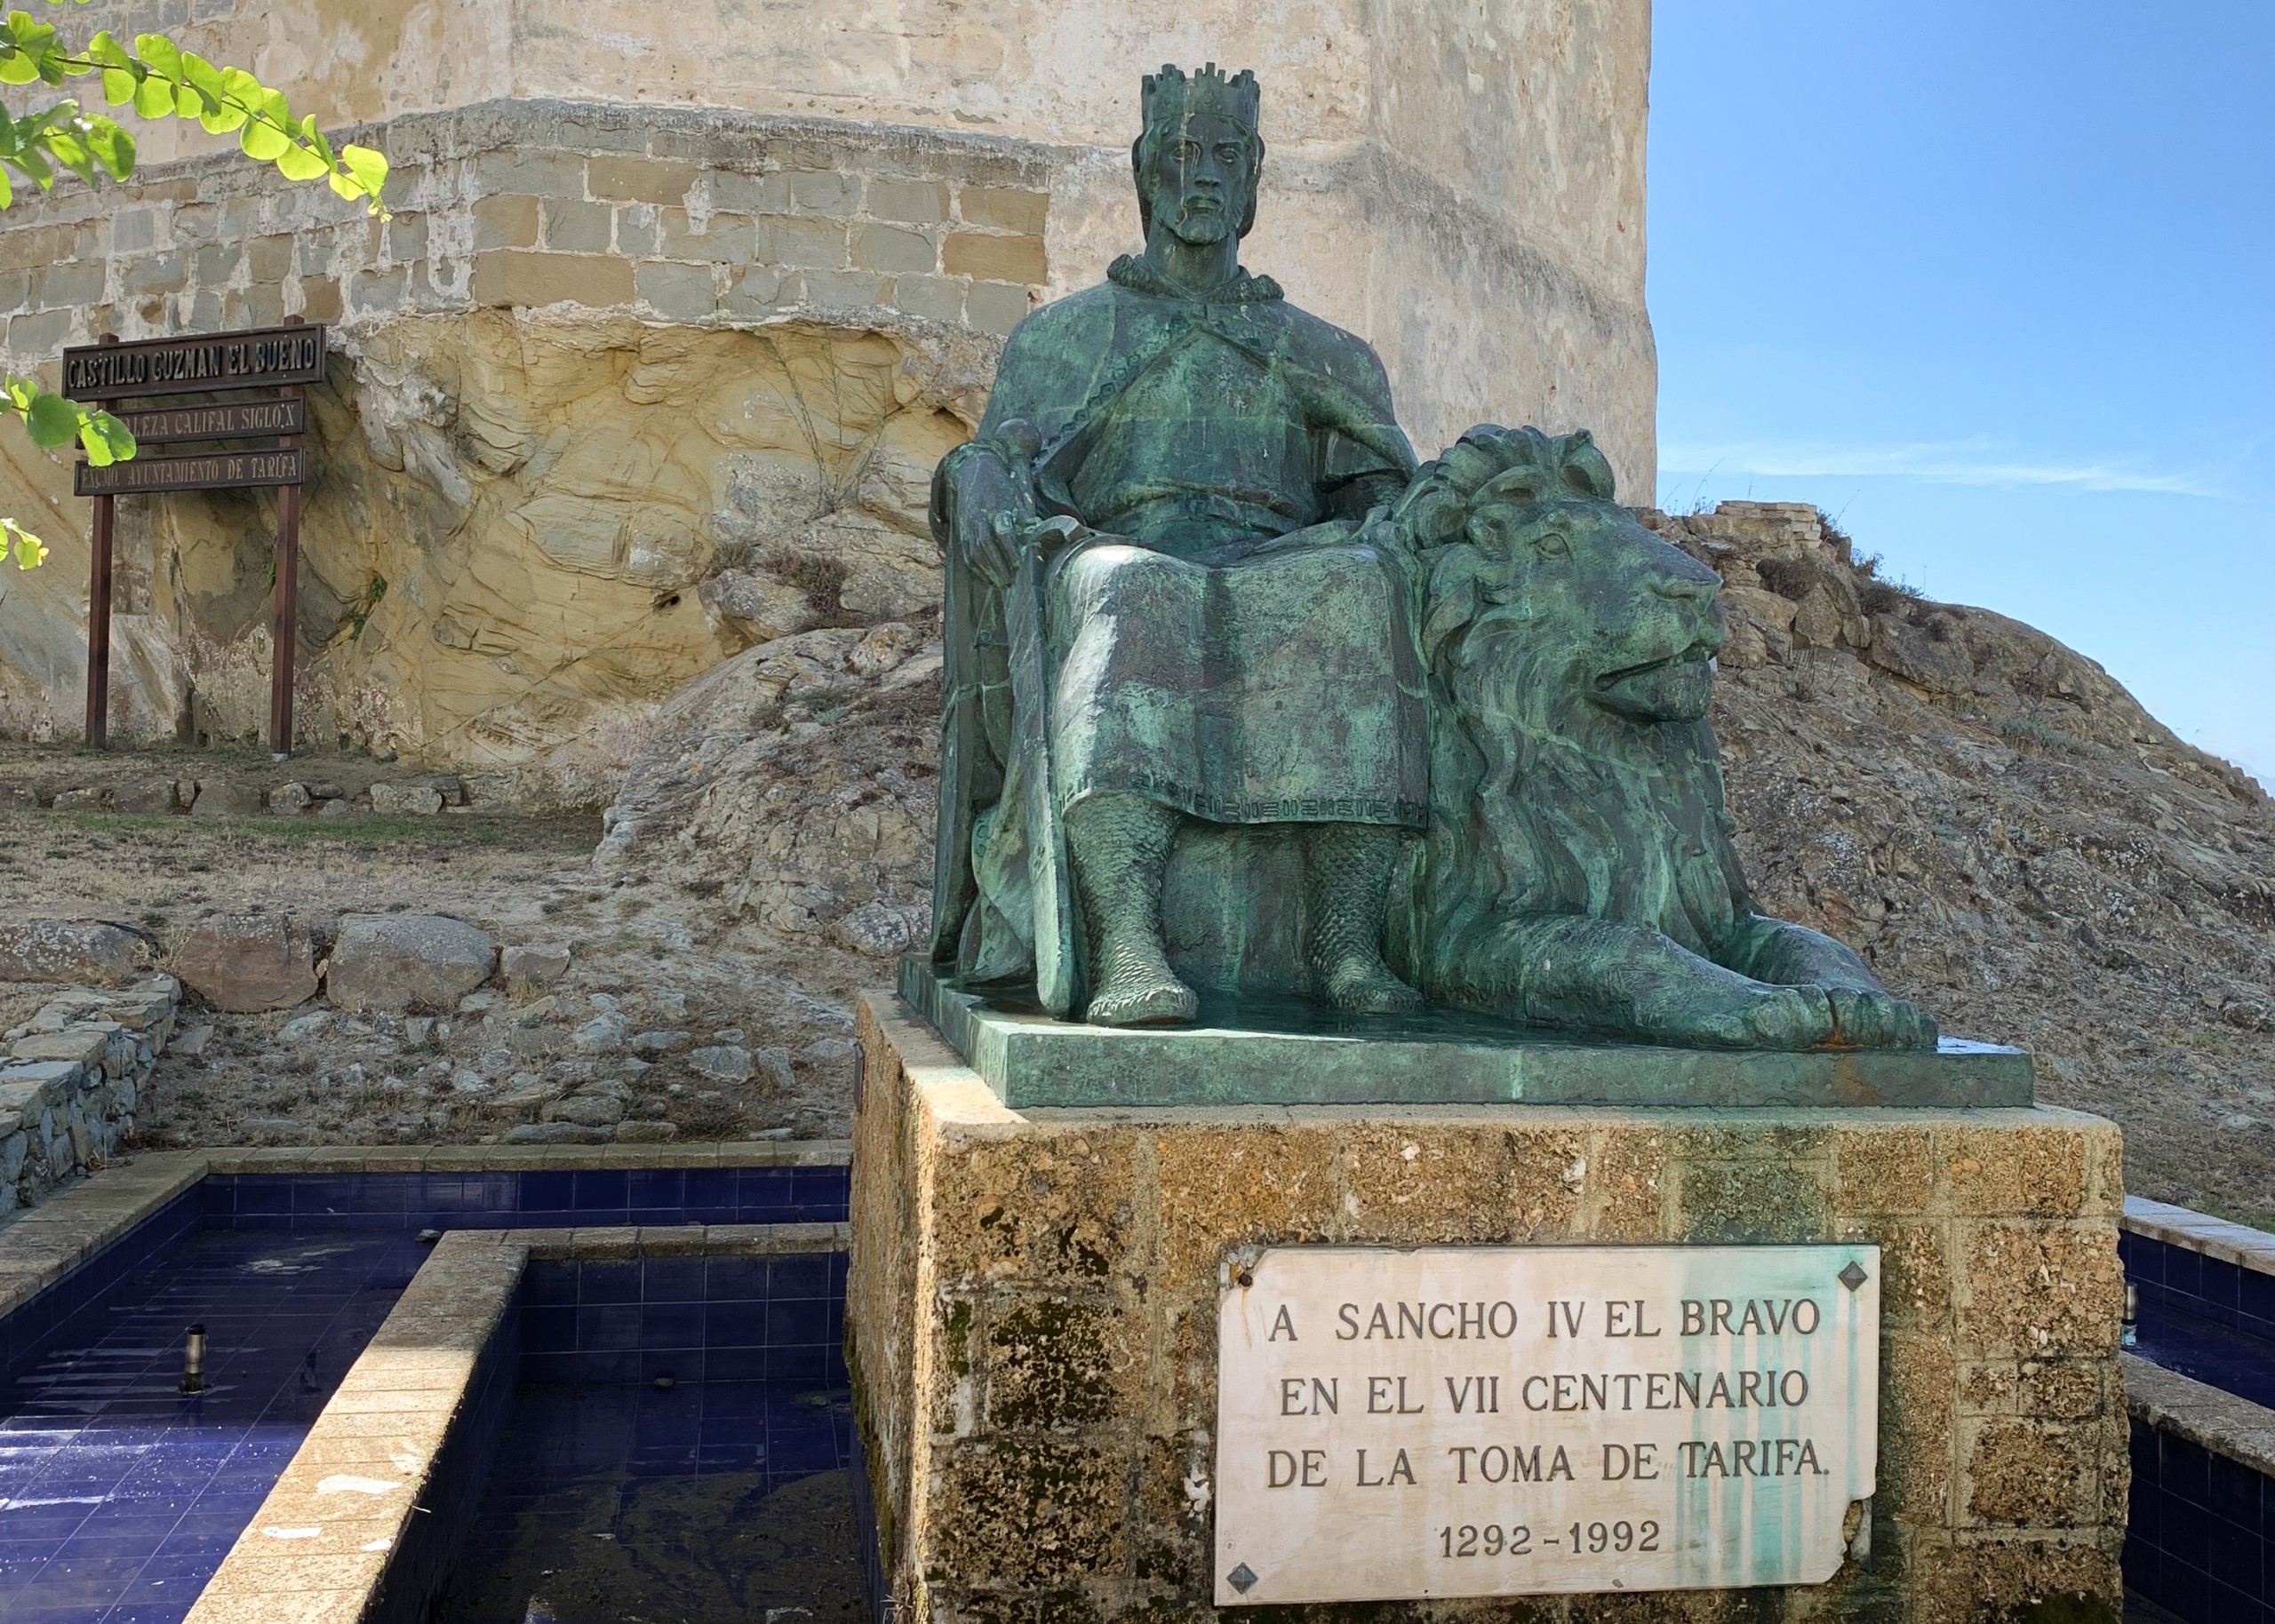 Statue of Sancho IV